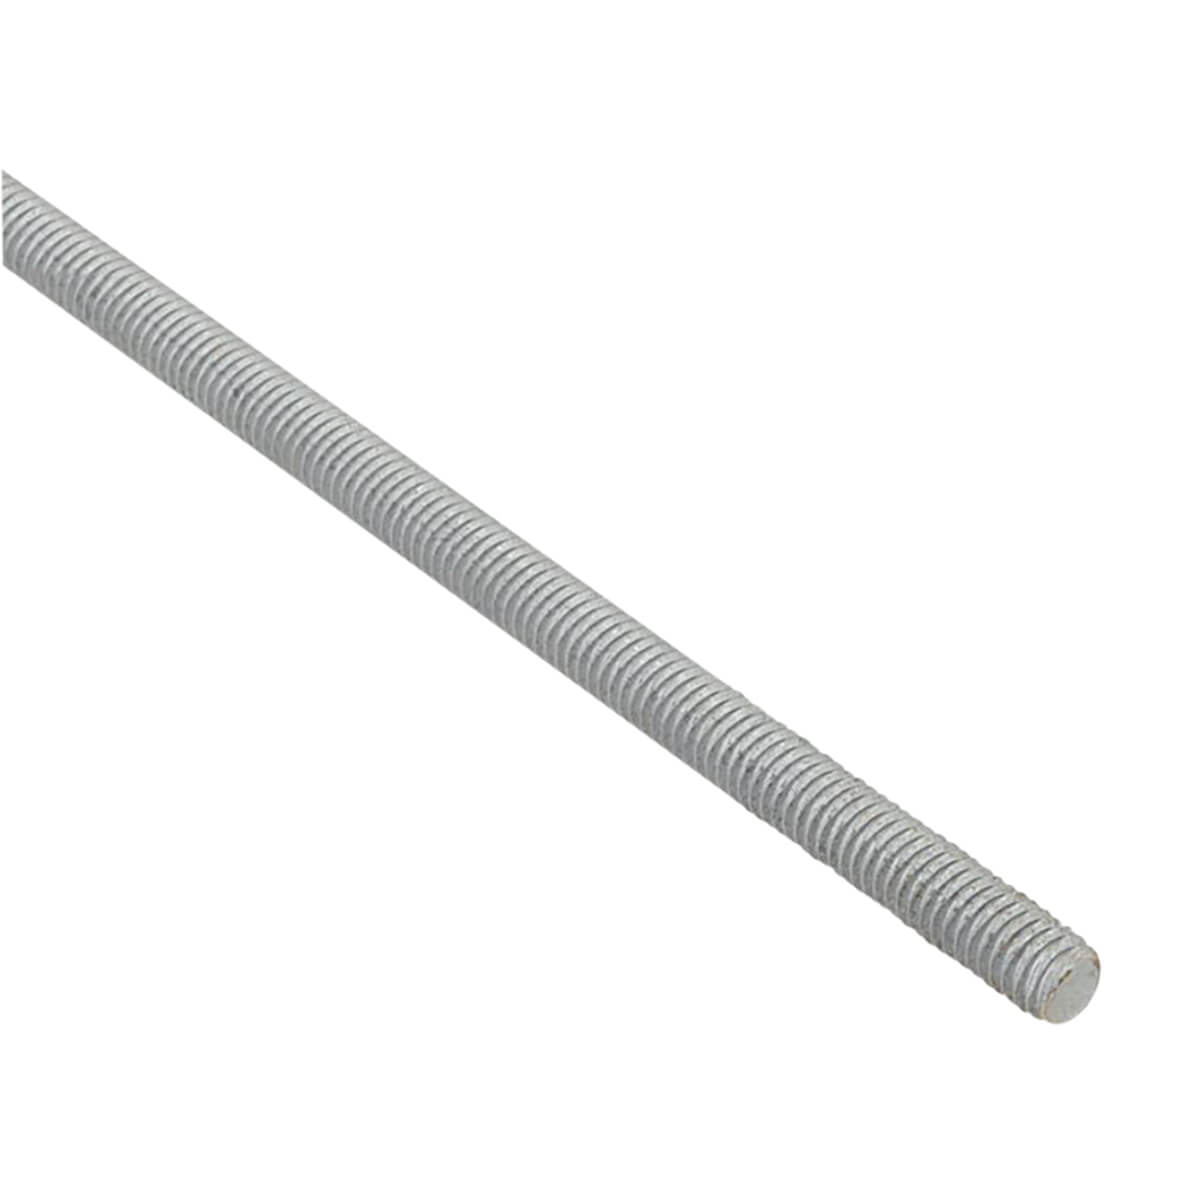 Threaded Rod - Galvanized Steel - 1/2-in-13 - 36-in